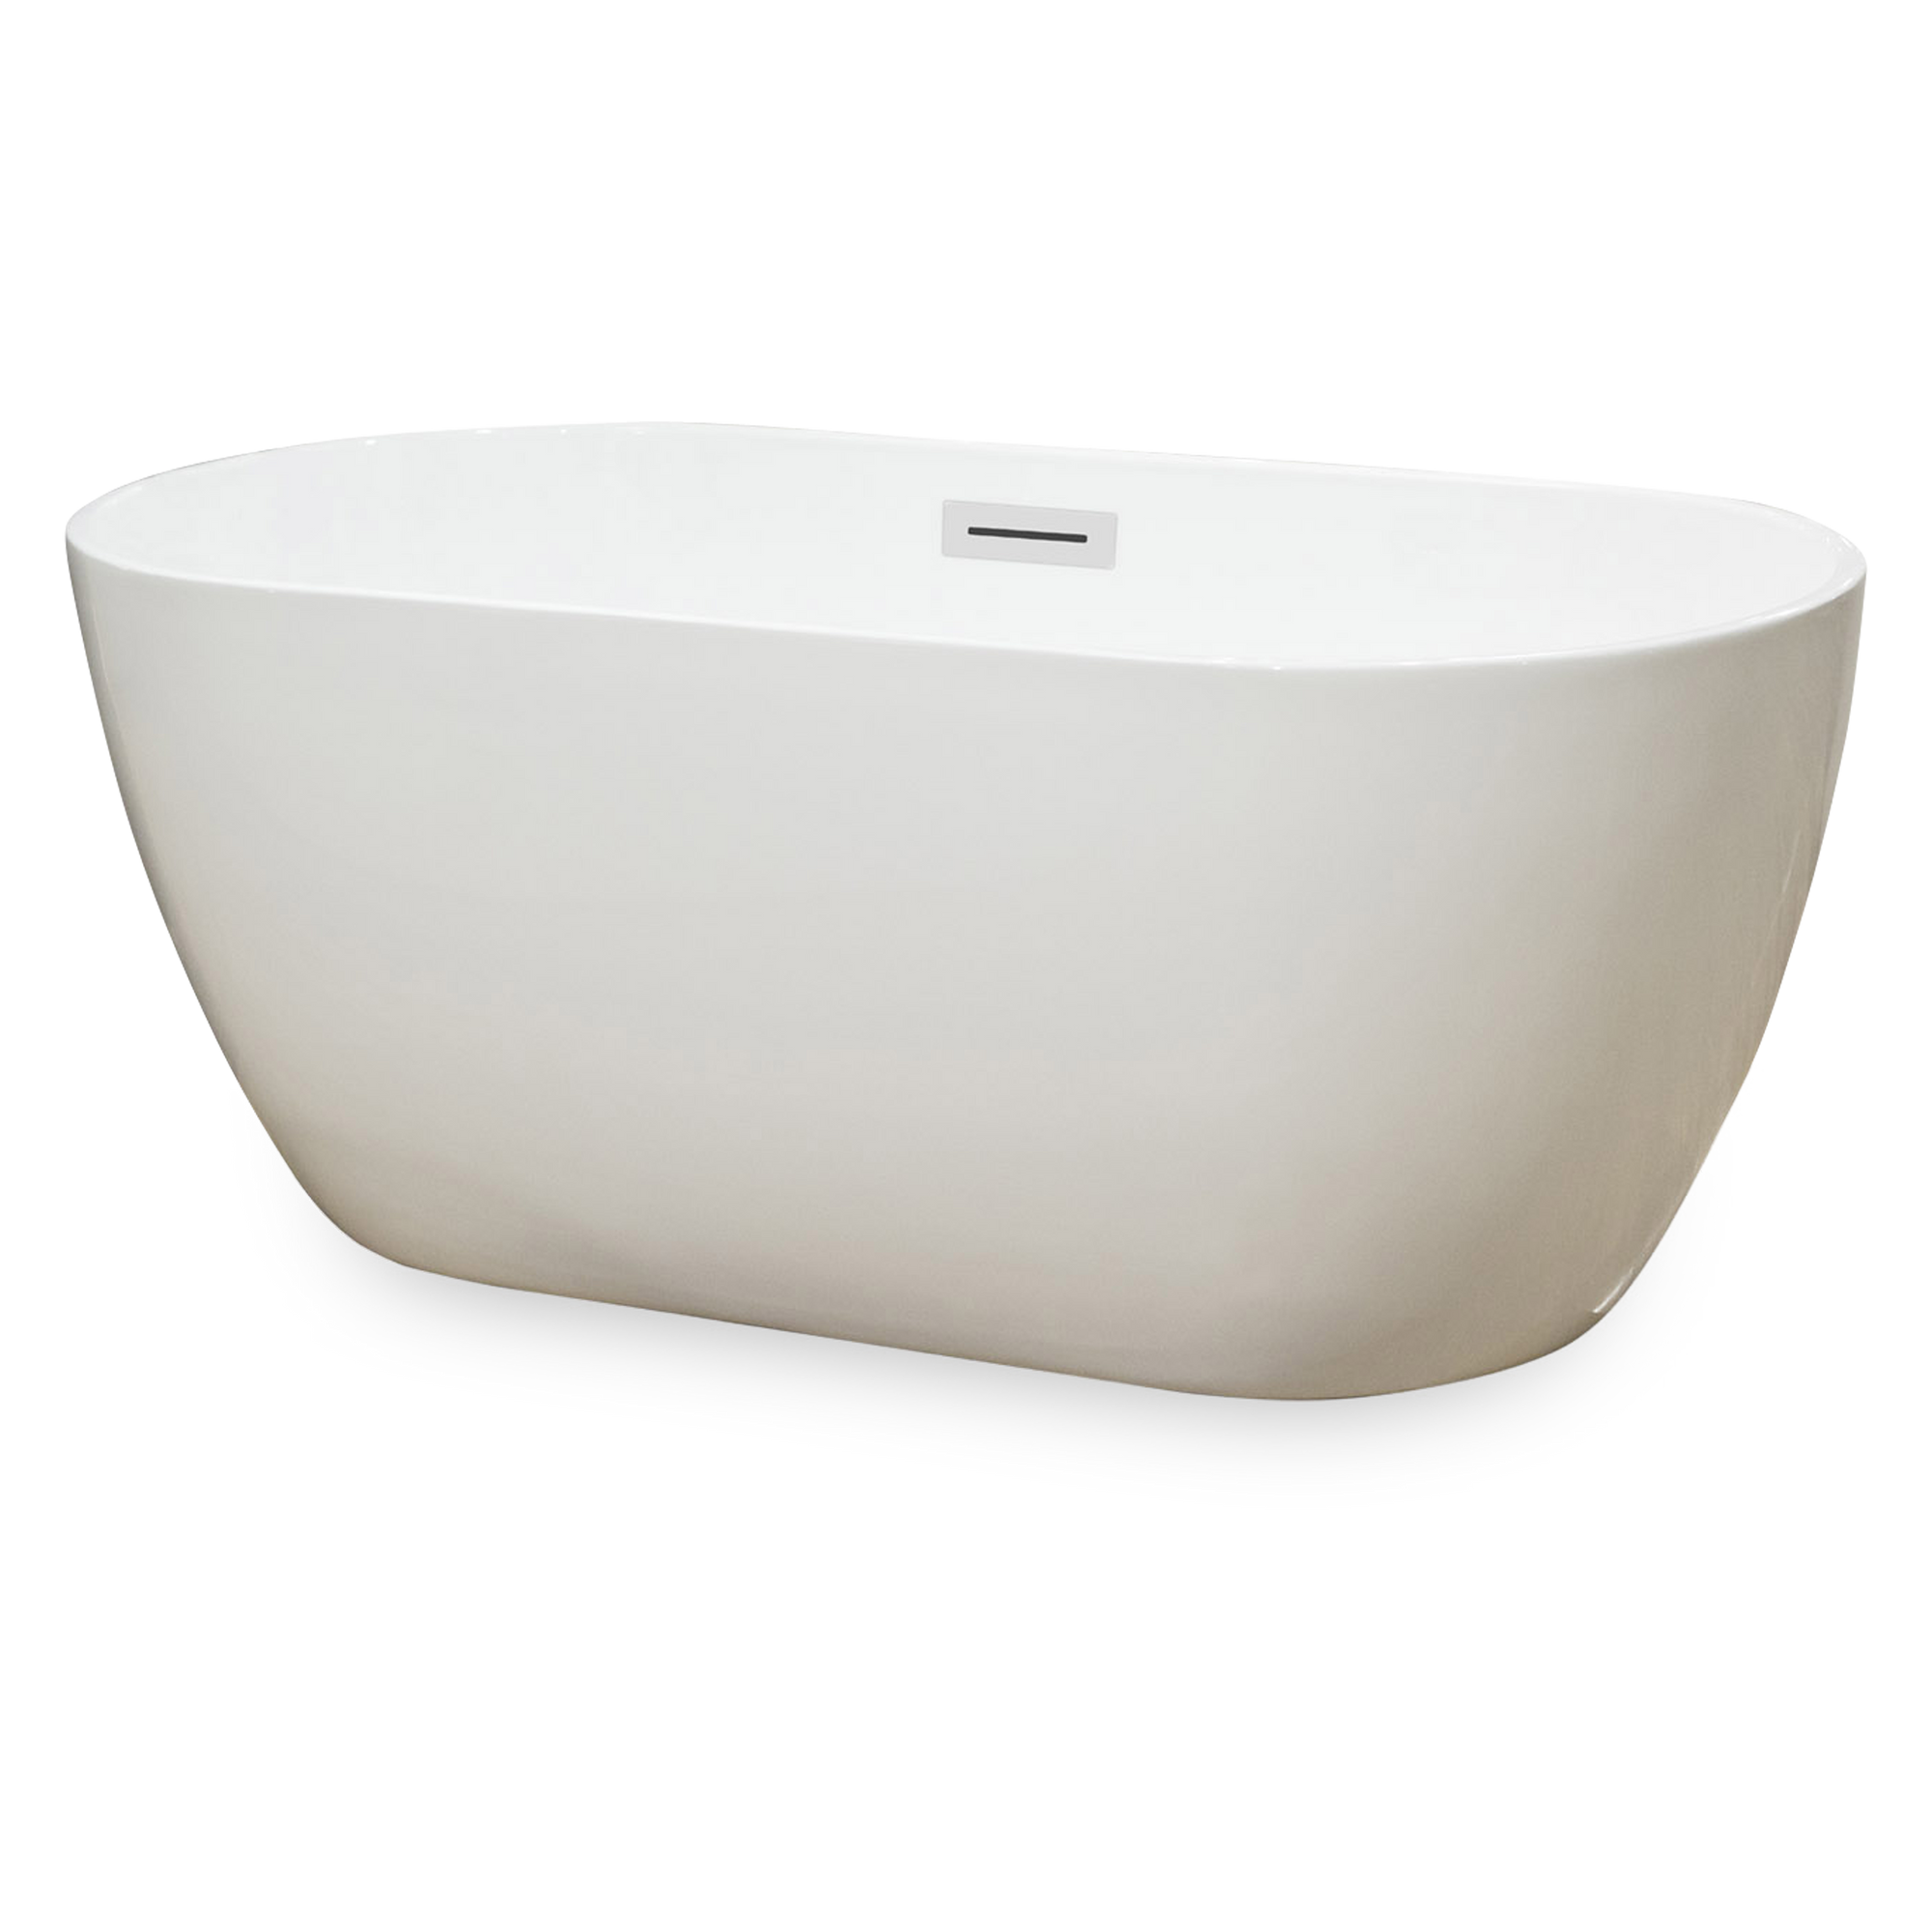 The Ember 6030 Soaker Bath is a reestanding soaker bath.